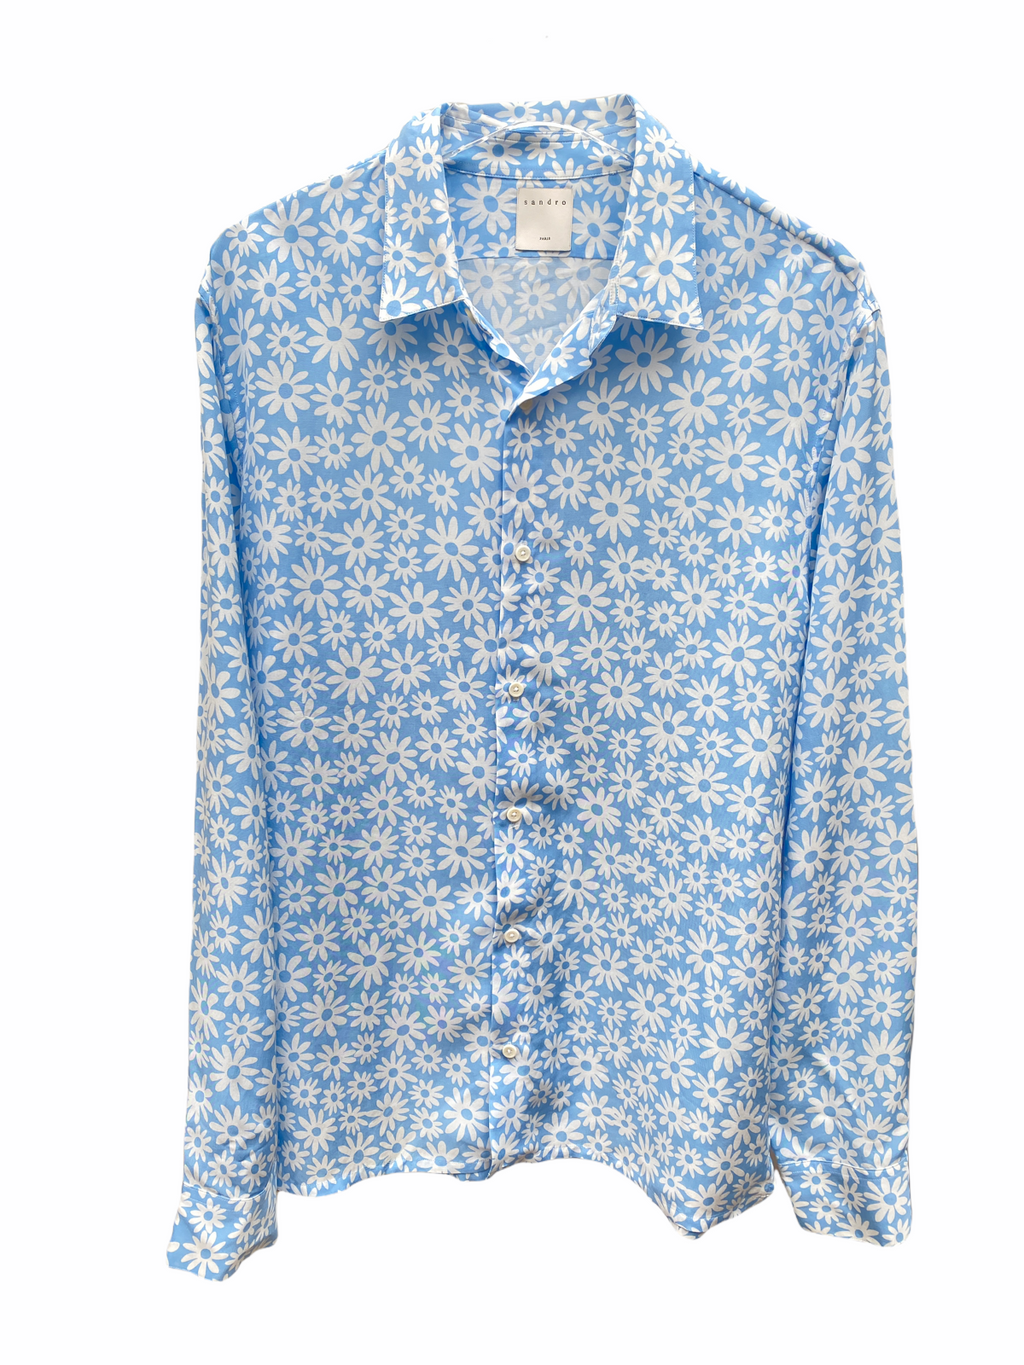 Blue / White Floral Shirt